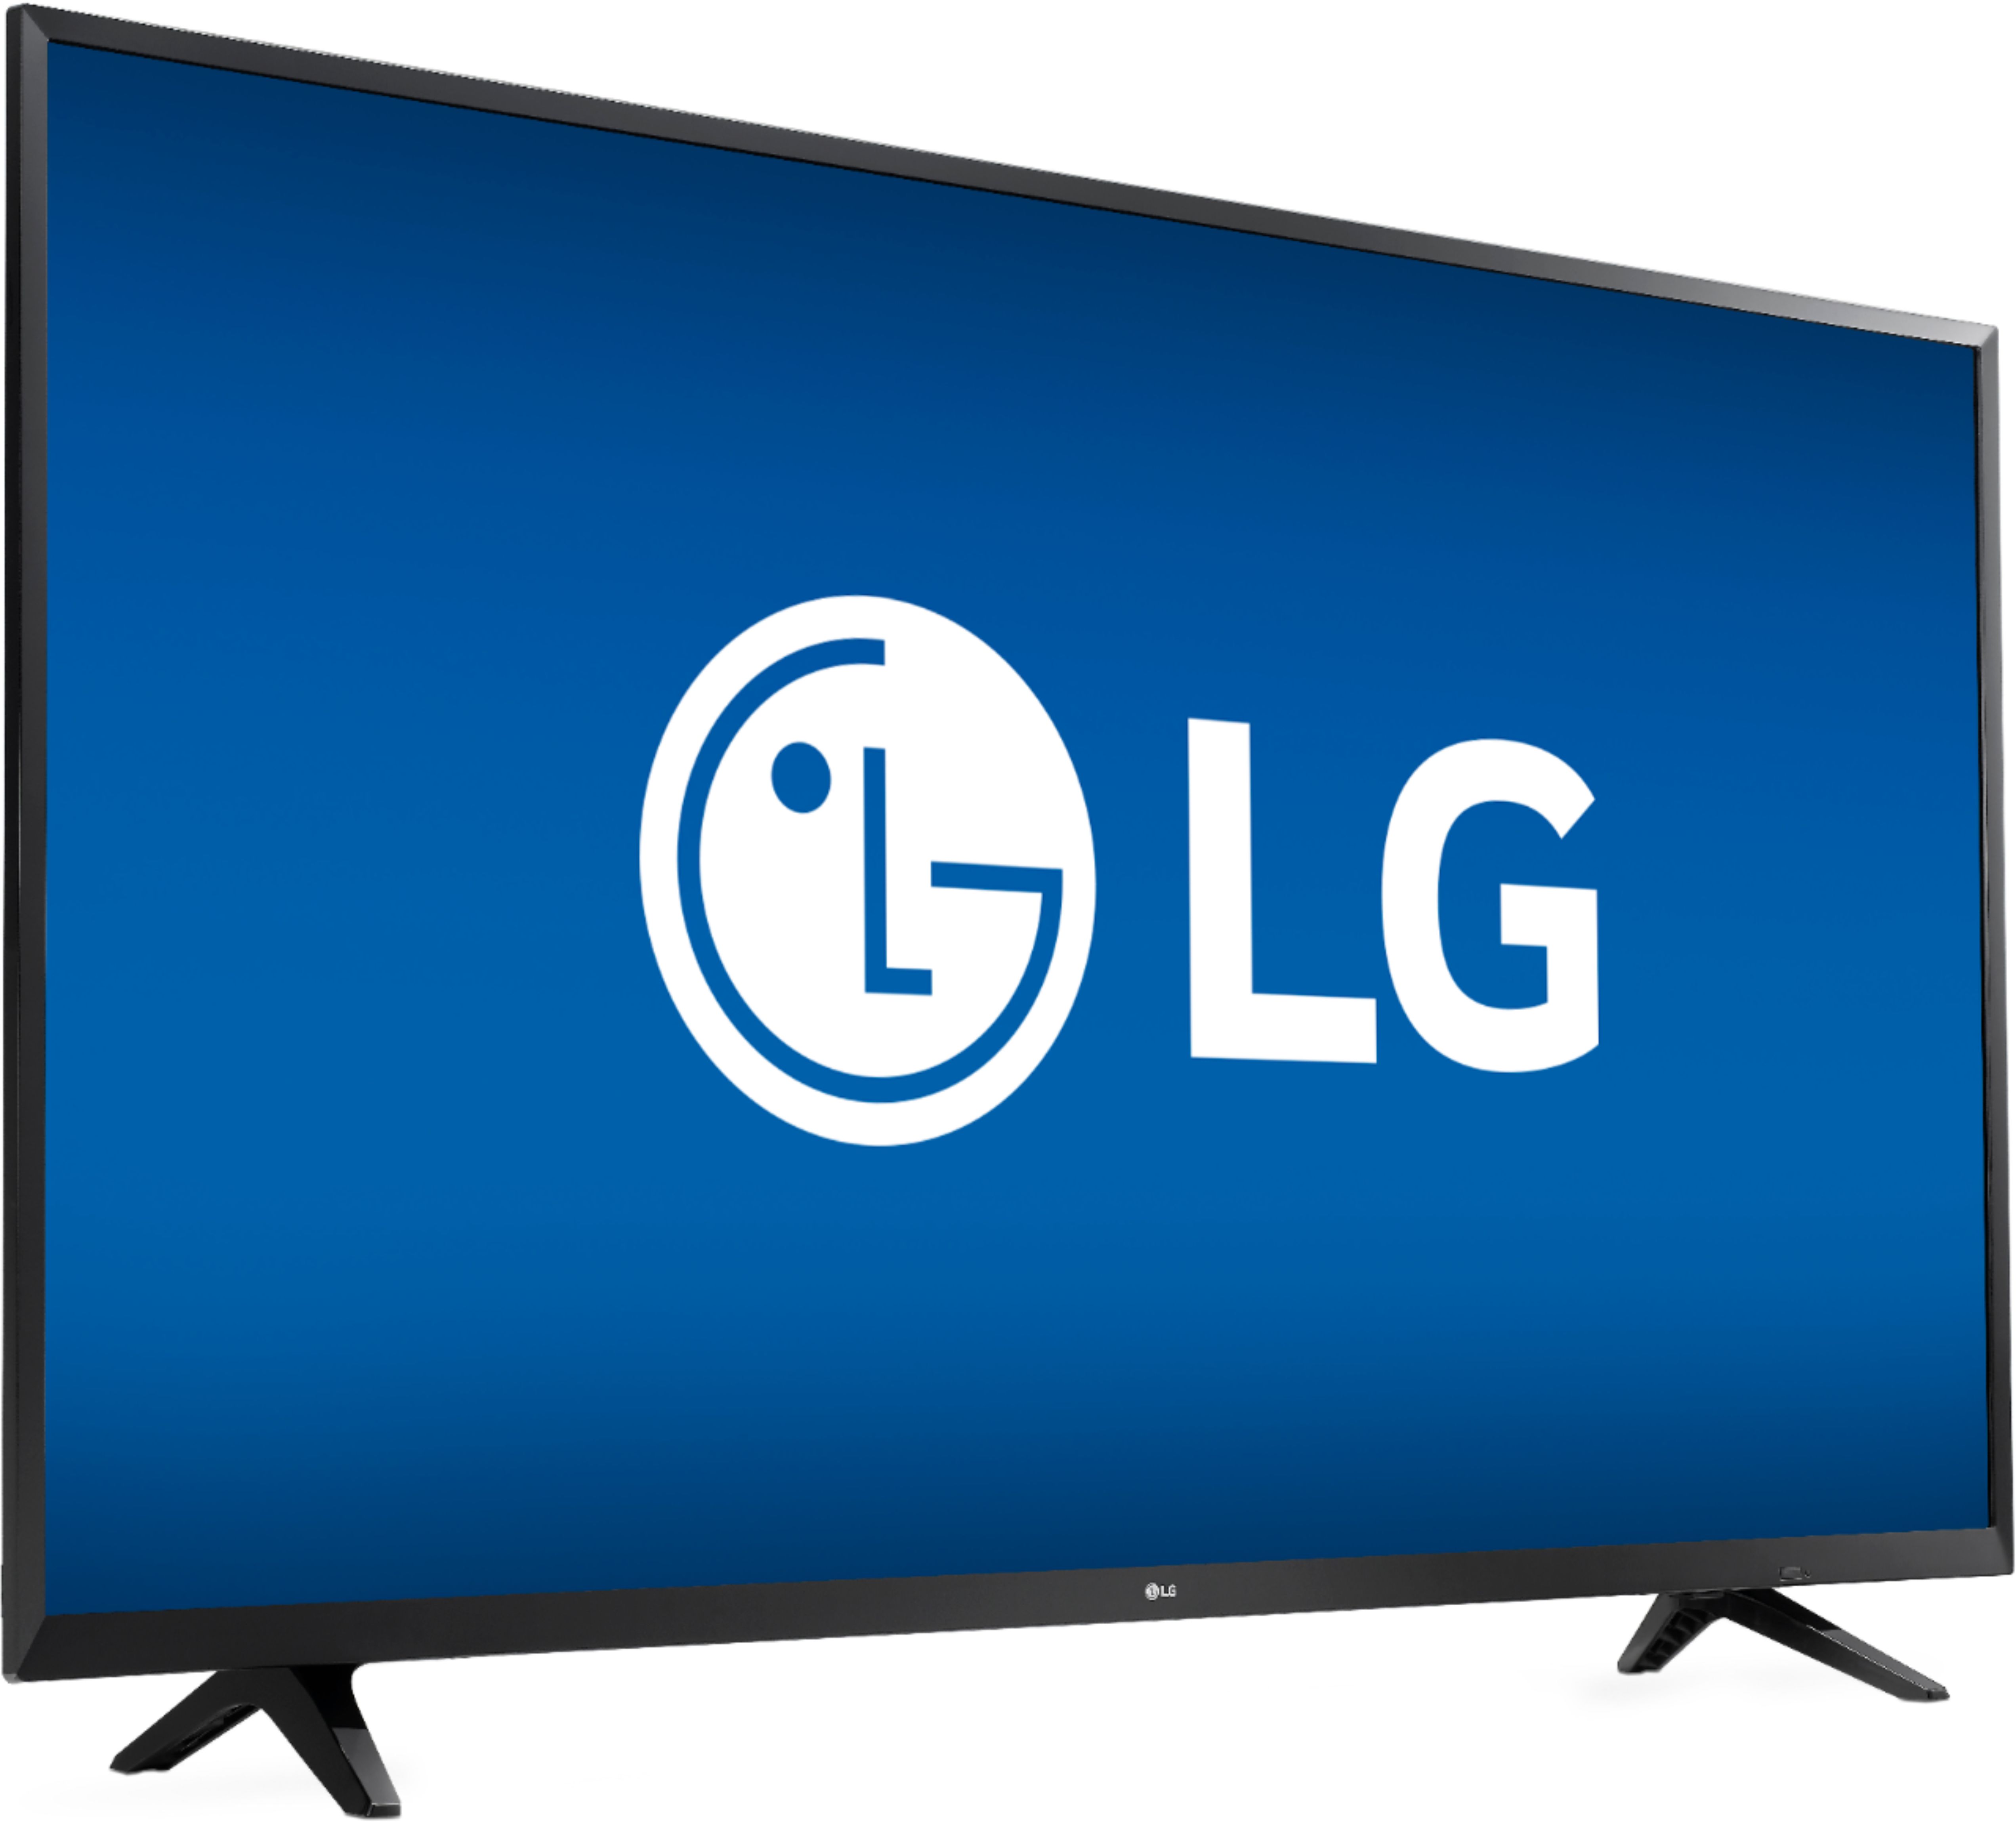 School teacher shoulder Peru Best Buy: LG 49" Class LED UJ6200 Series 2160p Smart 4K UHD TV with HDR  49UJ6200